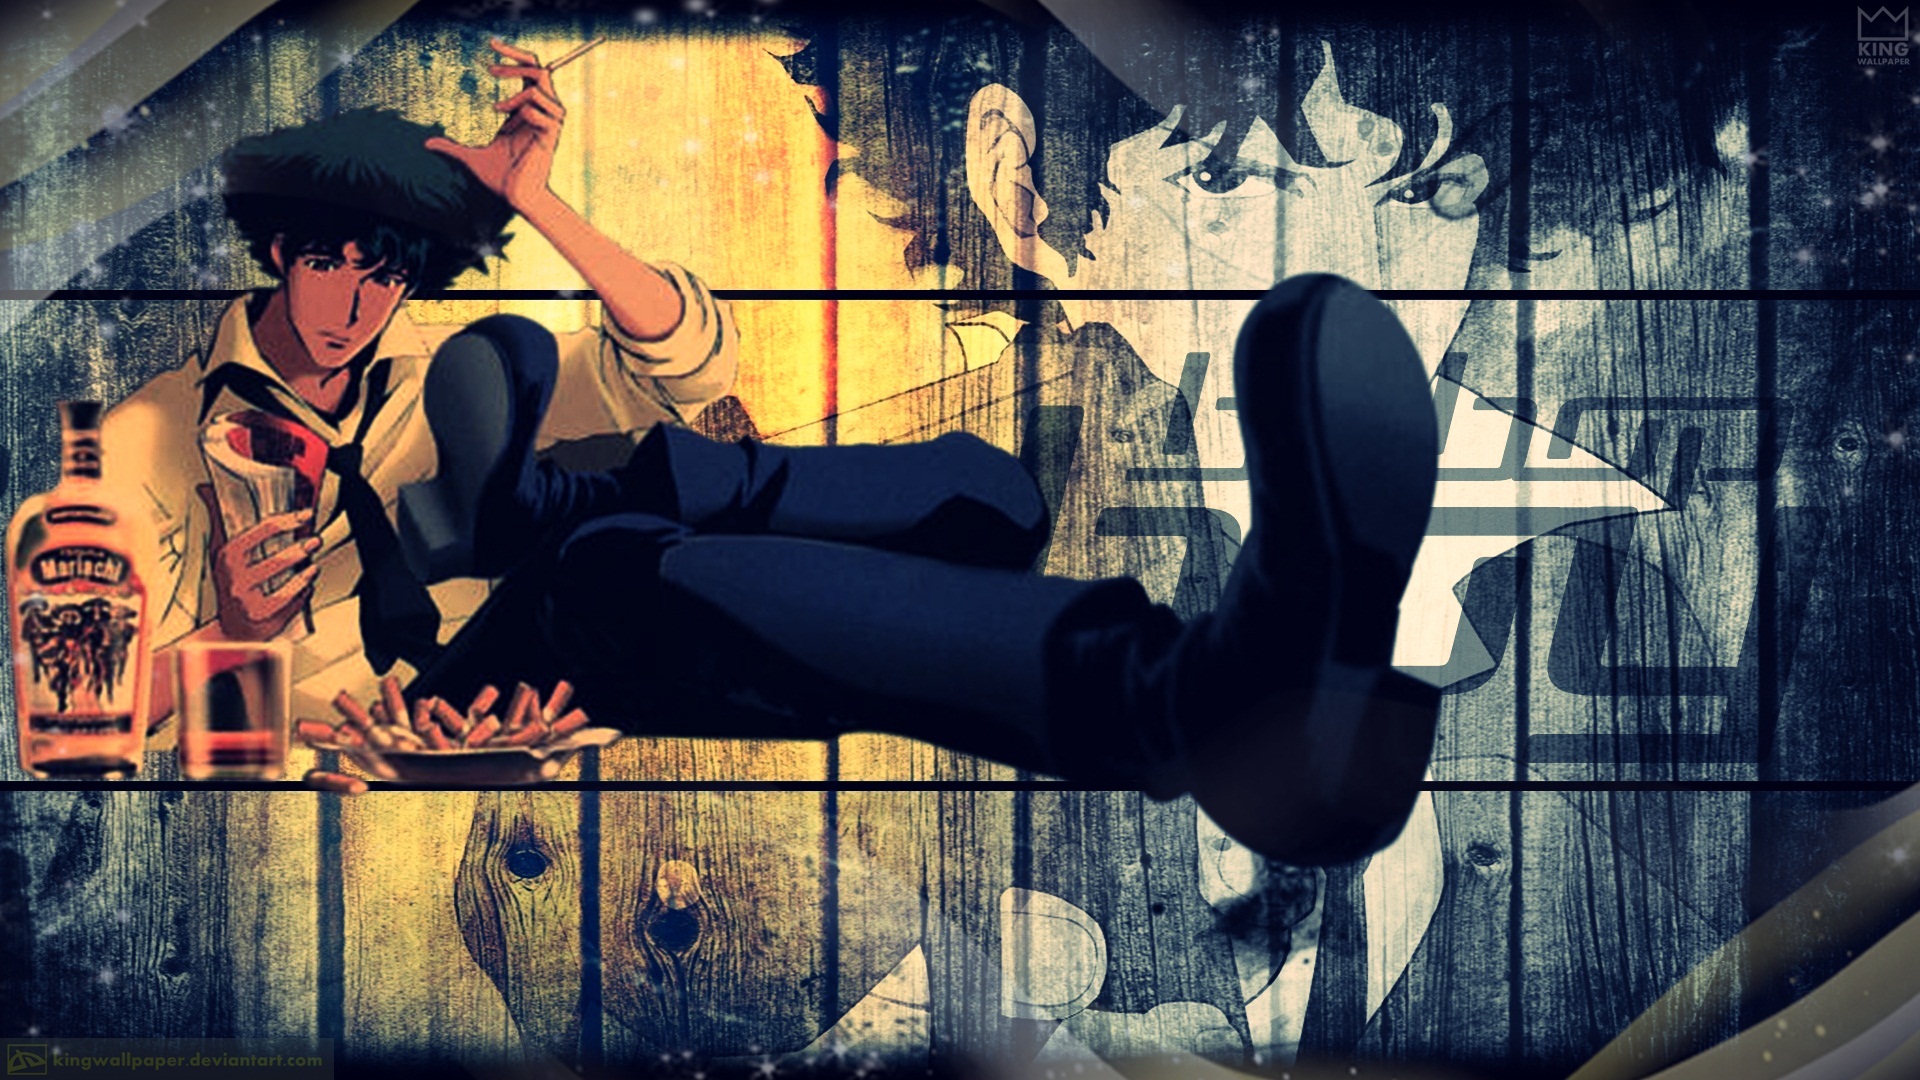 Download Cowboy Nami One Piece Anime Wallpaper